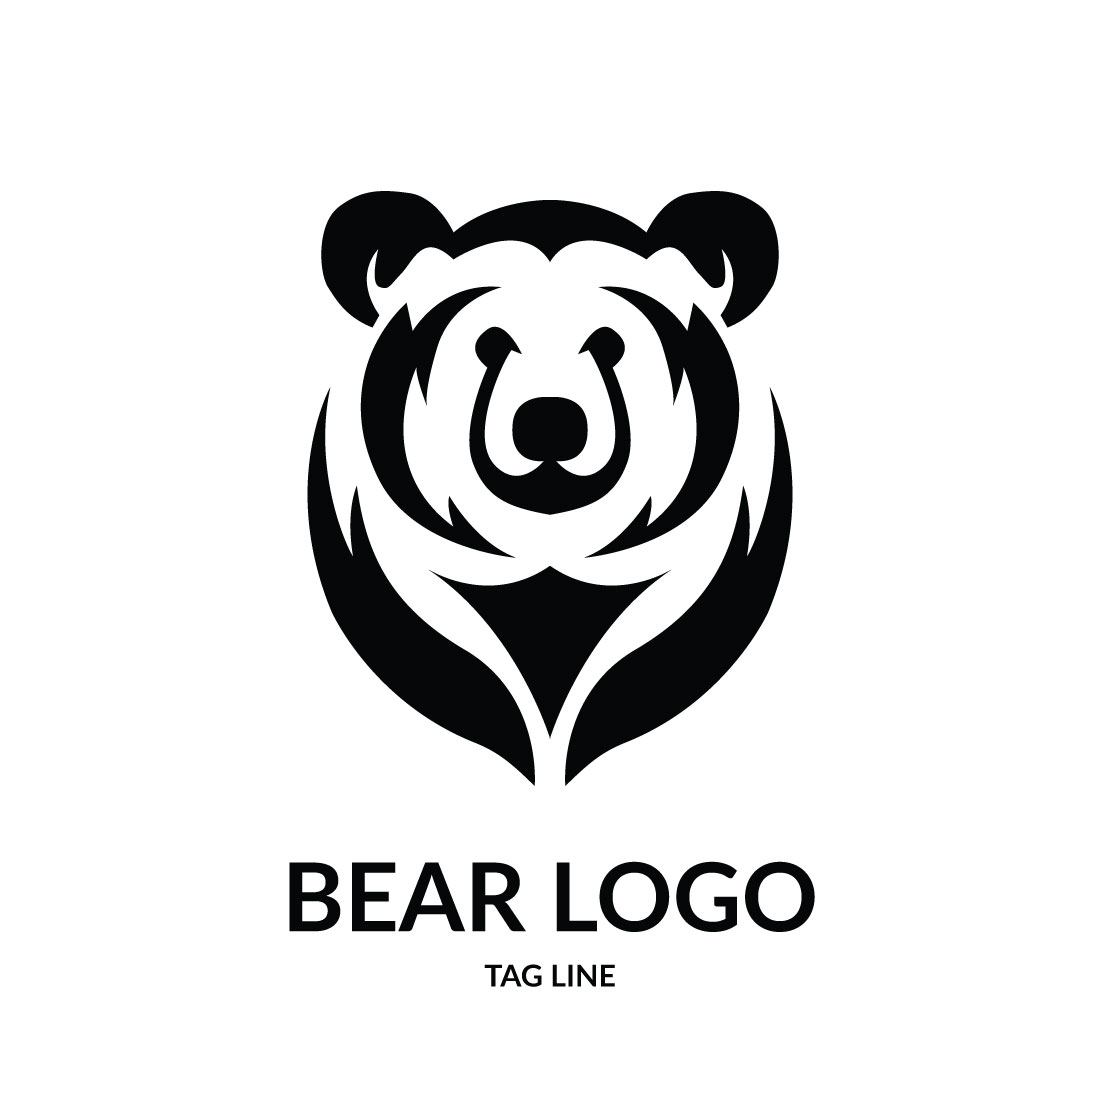 Bear Logo Template cover image.